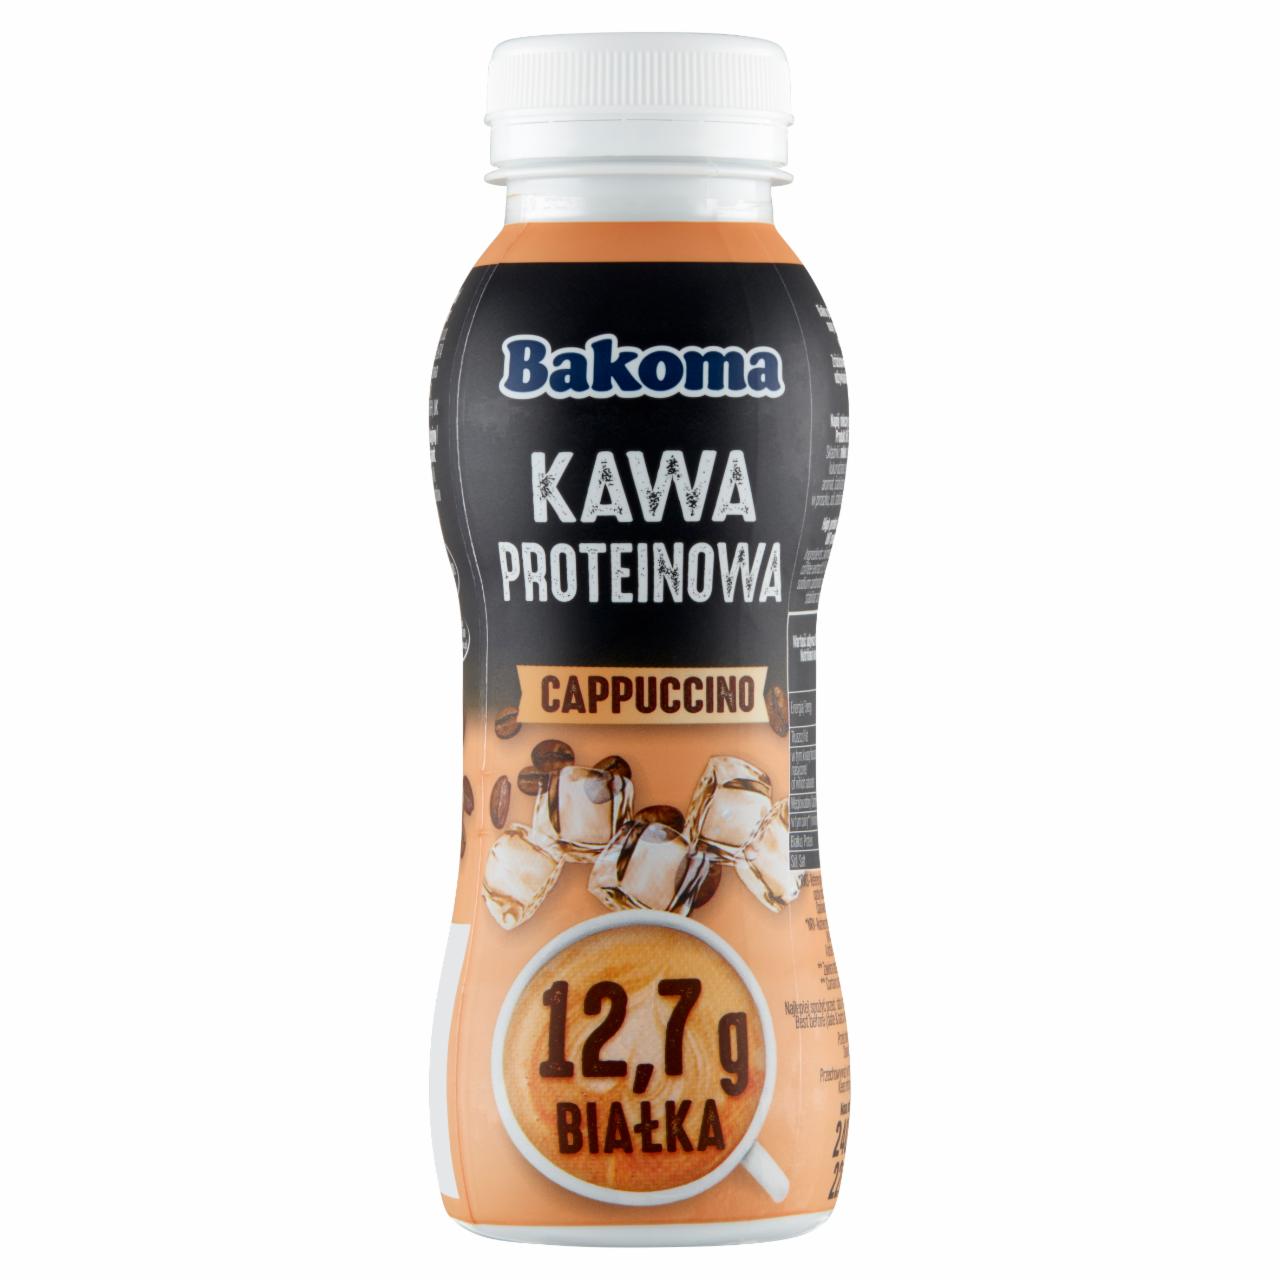 Zdjęcia - Bakoma Cappuccino Kawa proteinowa 240 g